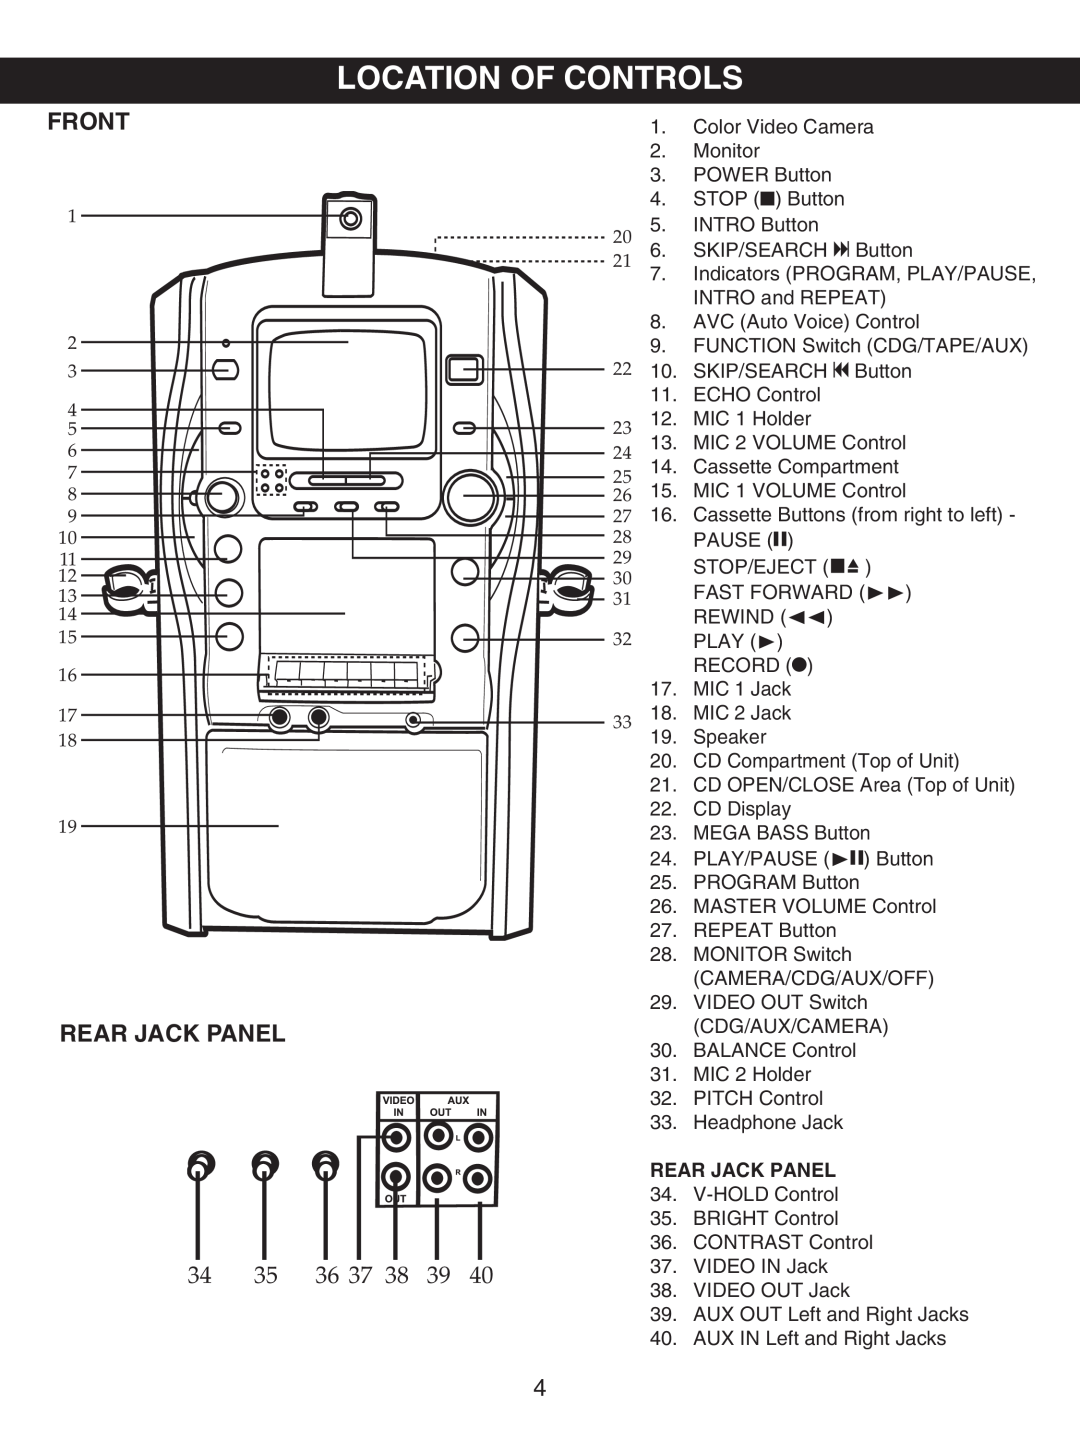 Memorex MKS8503 manual Location Of Controls, Front, Rear Jack Panel 